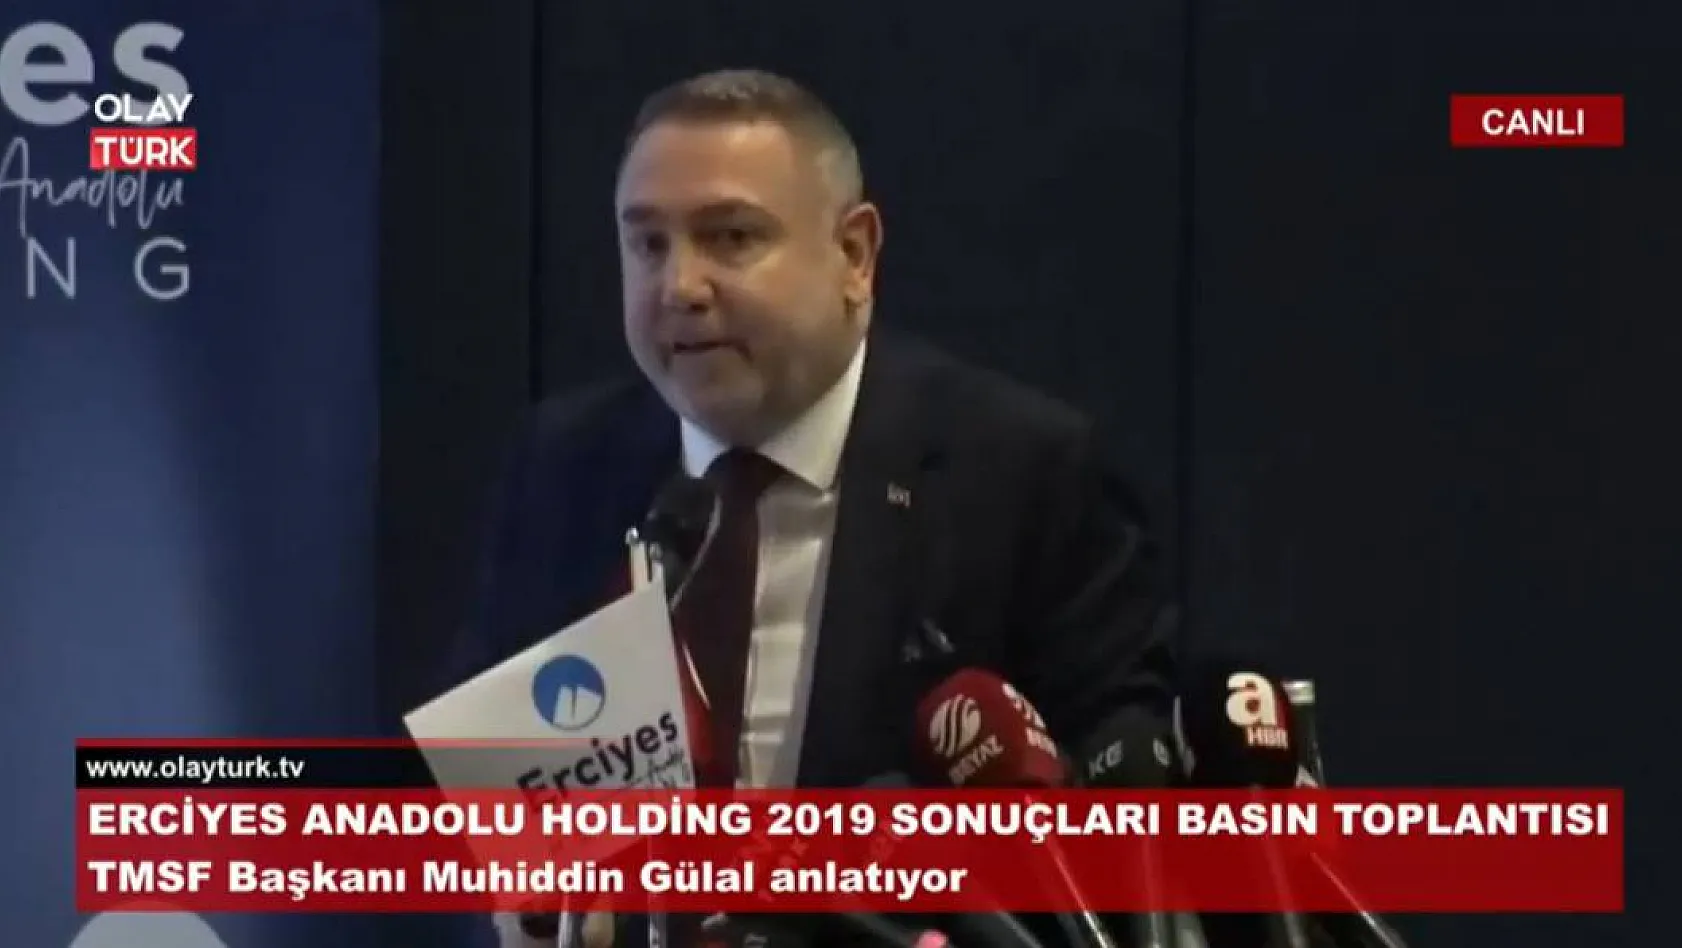 Erciyes Anadolu Holding'ten Savunma Sanayii hamlesi